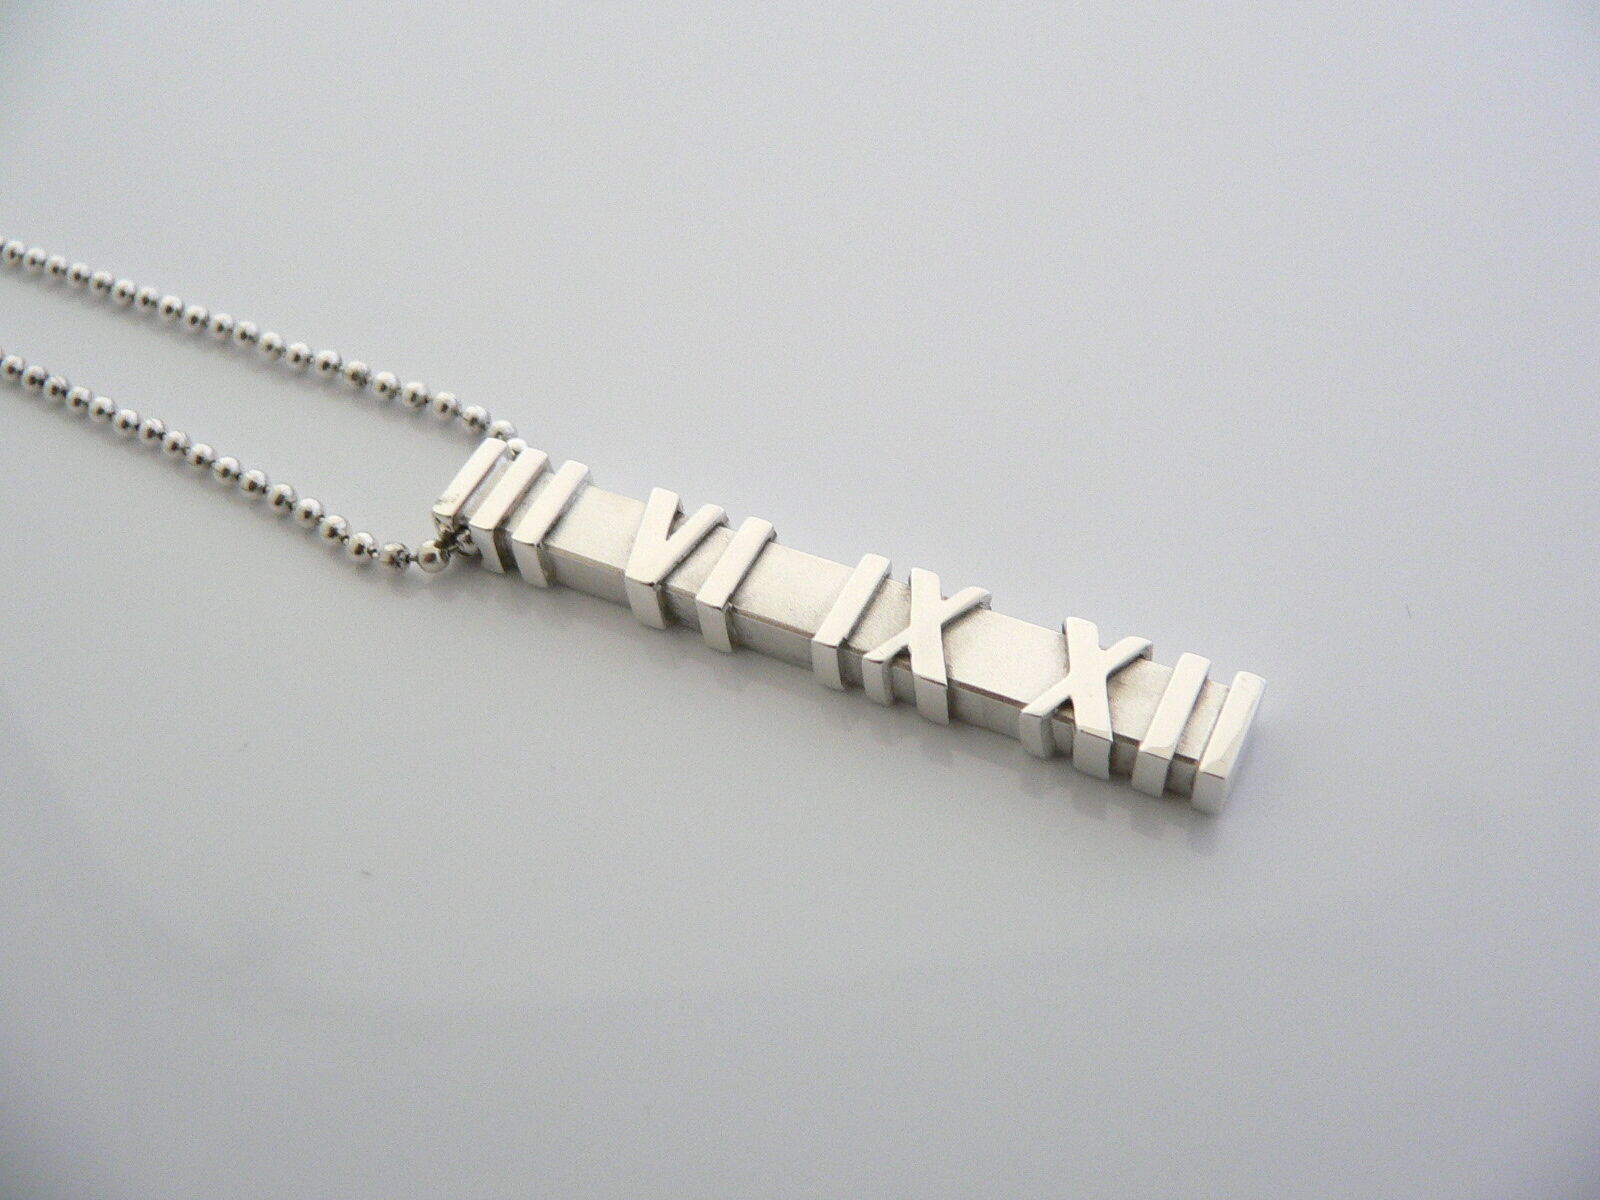 Tiffany & Co Silver Atlas Bar Dangling Dangle Necklace Pendant Chain Gift 20 In